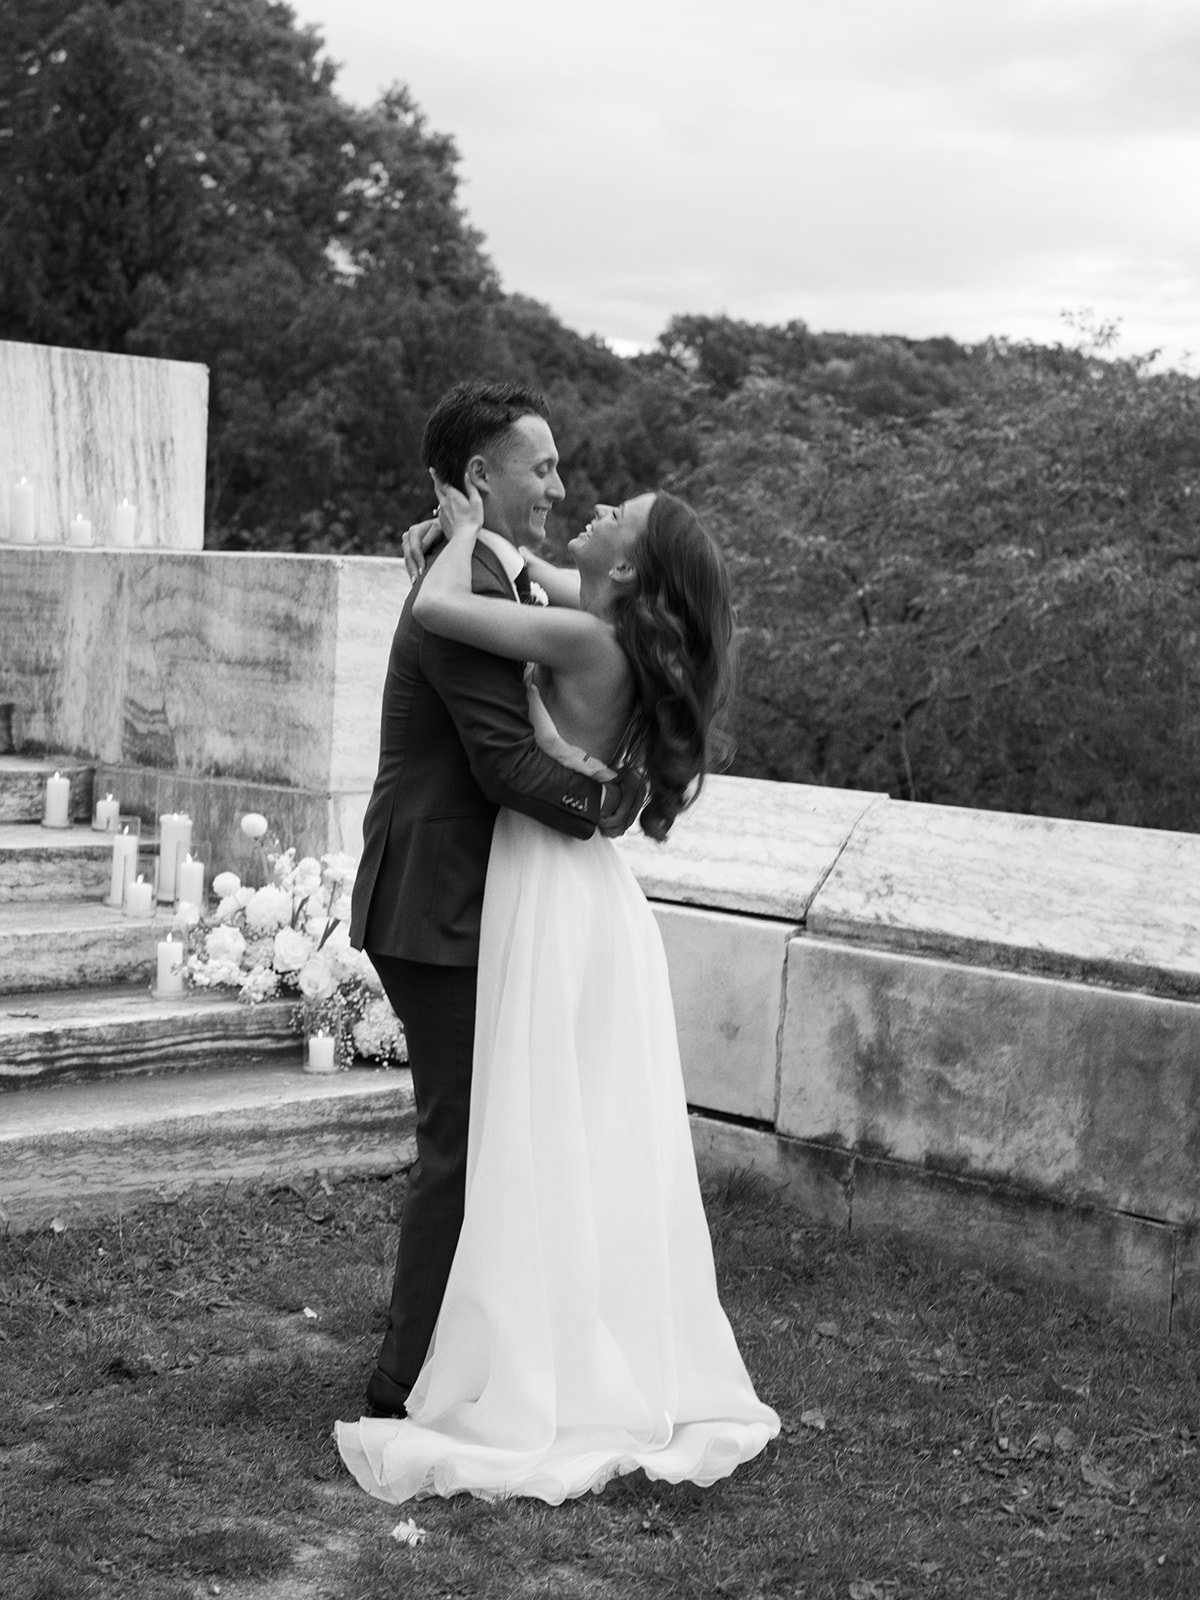 Best-Austin-Wedding-Photographers-Elopement-Film-35mm-Asheville-Santa-Barbara-1048.jpg